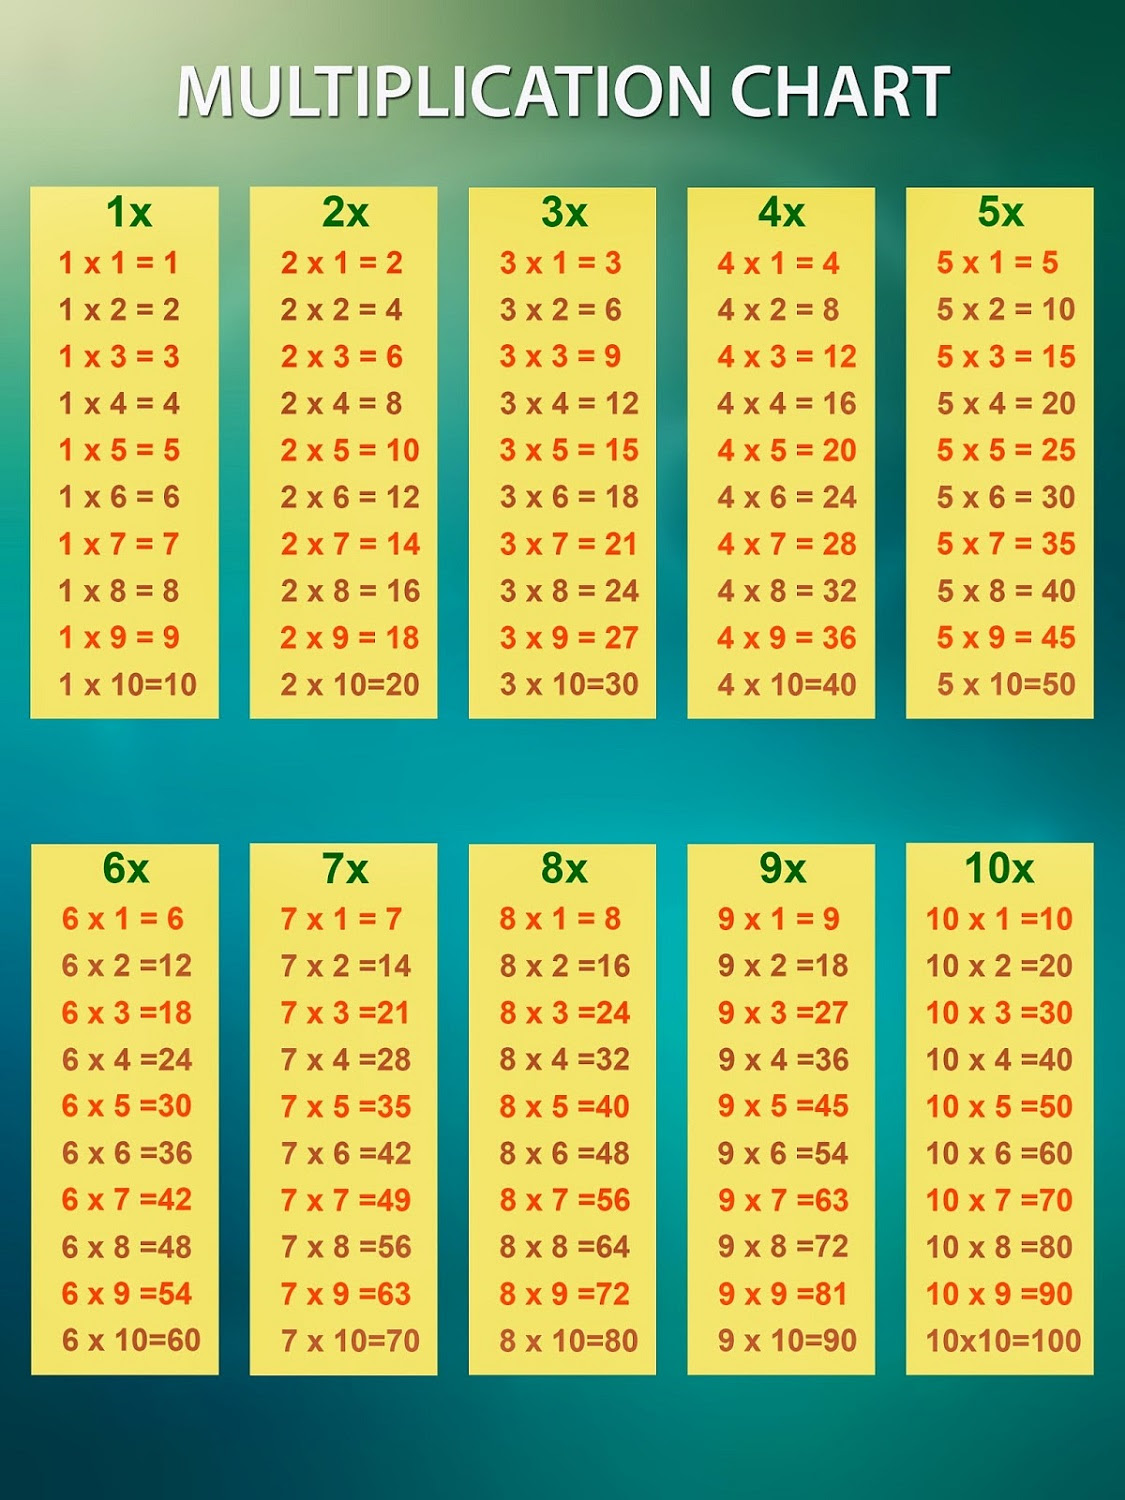 free-printable-color-multiplication-chart-1-12